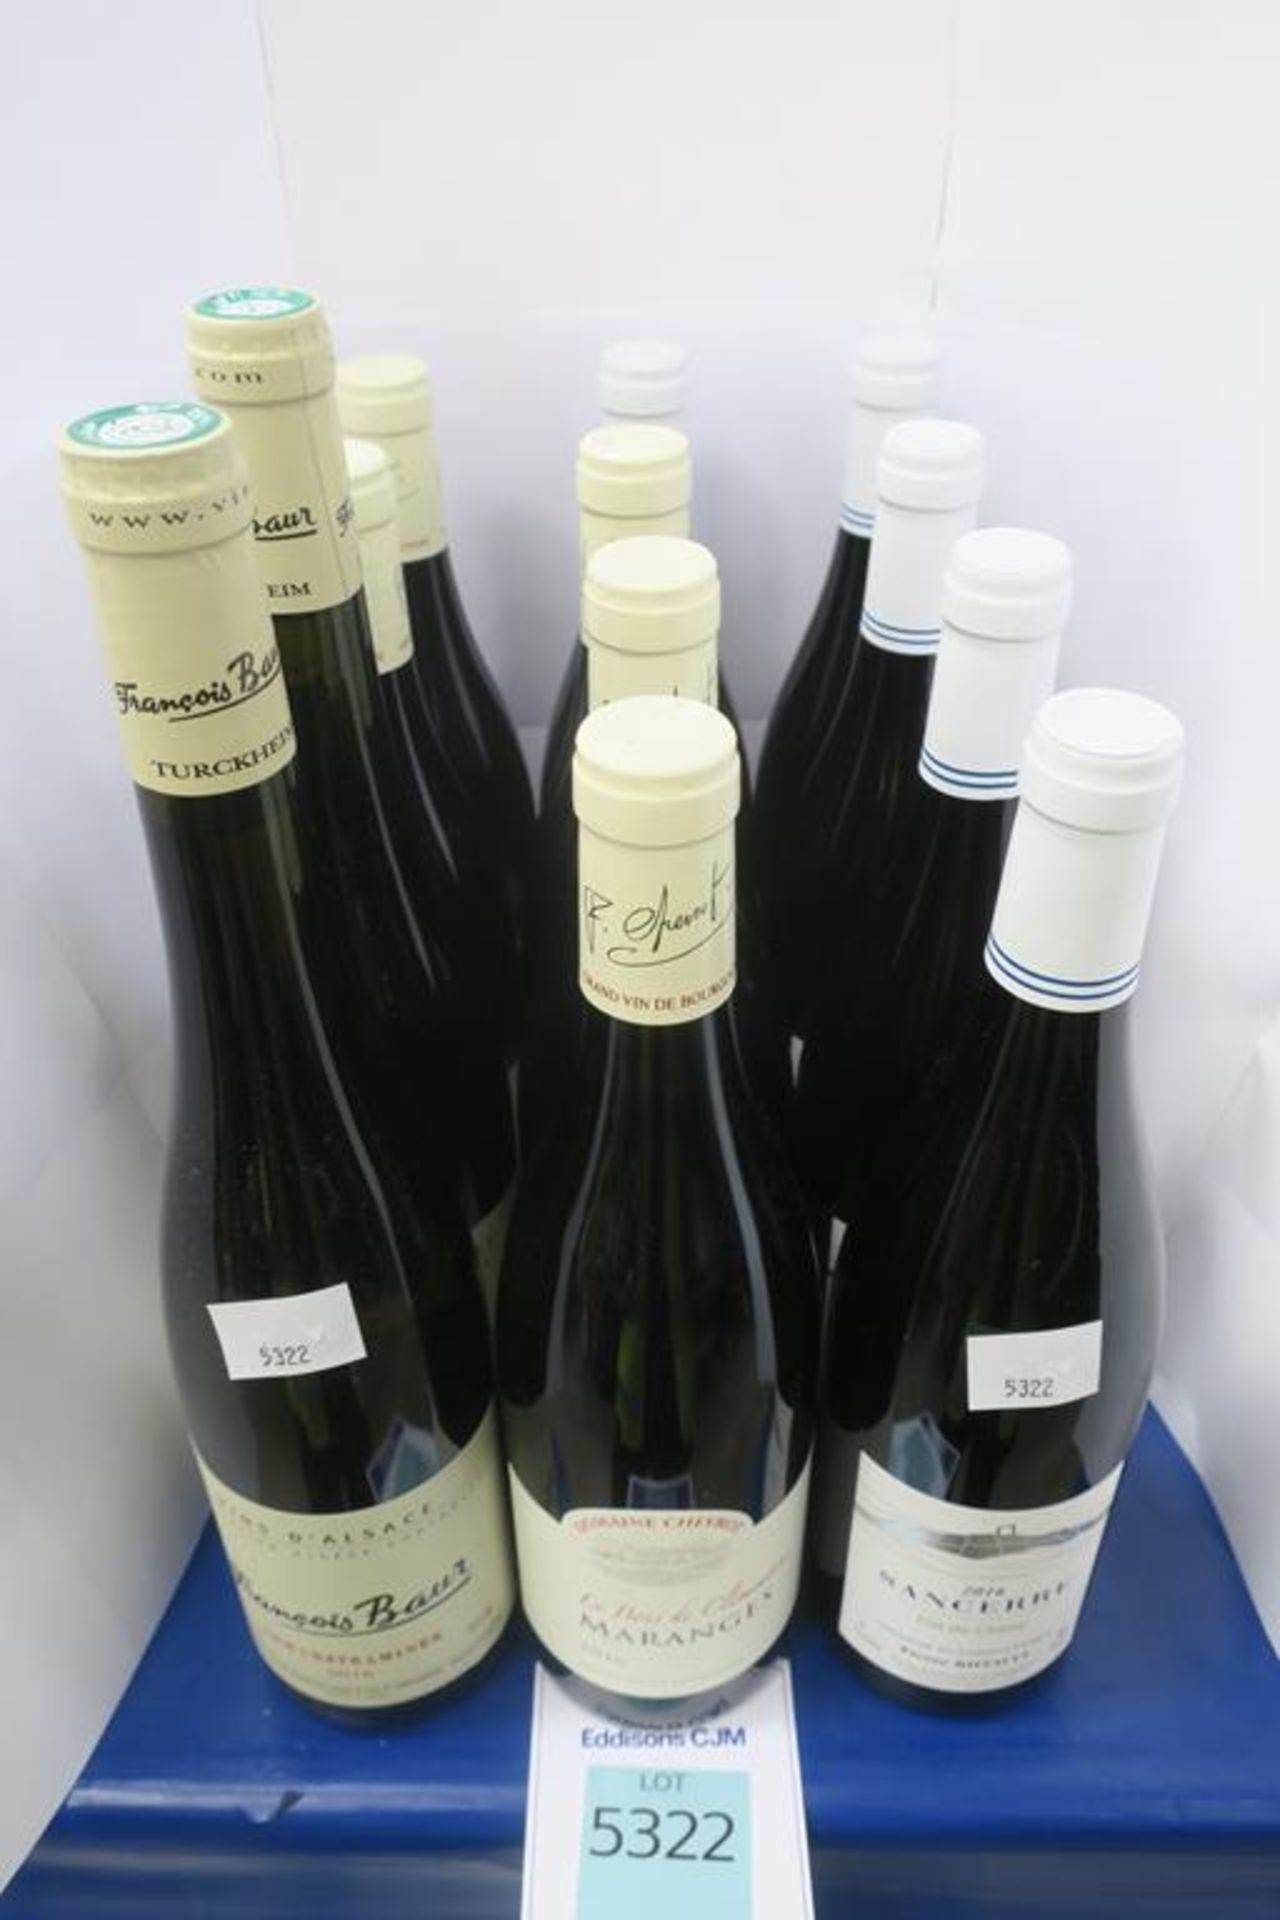 Domaine Du Carroir Red Wine, Domaine Chevrot Red Wine and Vins D'Alsace François White Wine